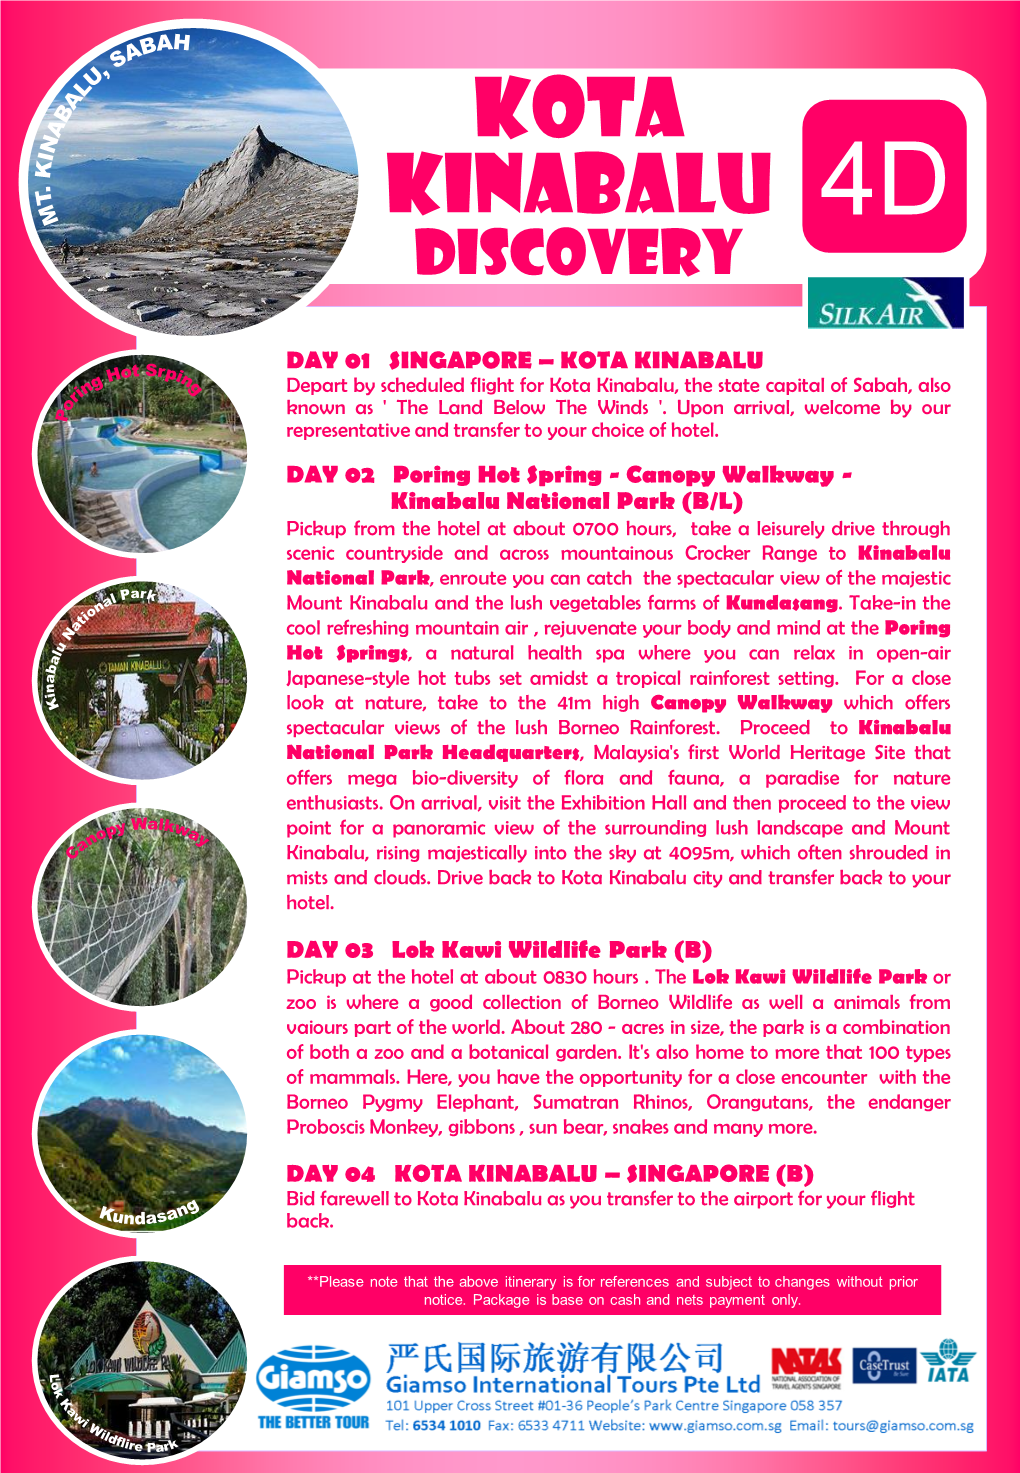 Kota Kinabalu 4D Discovery